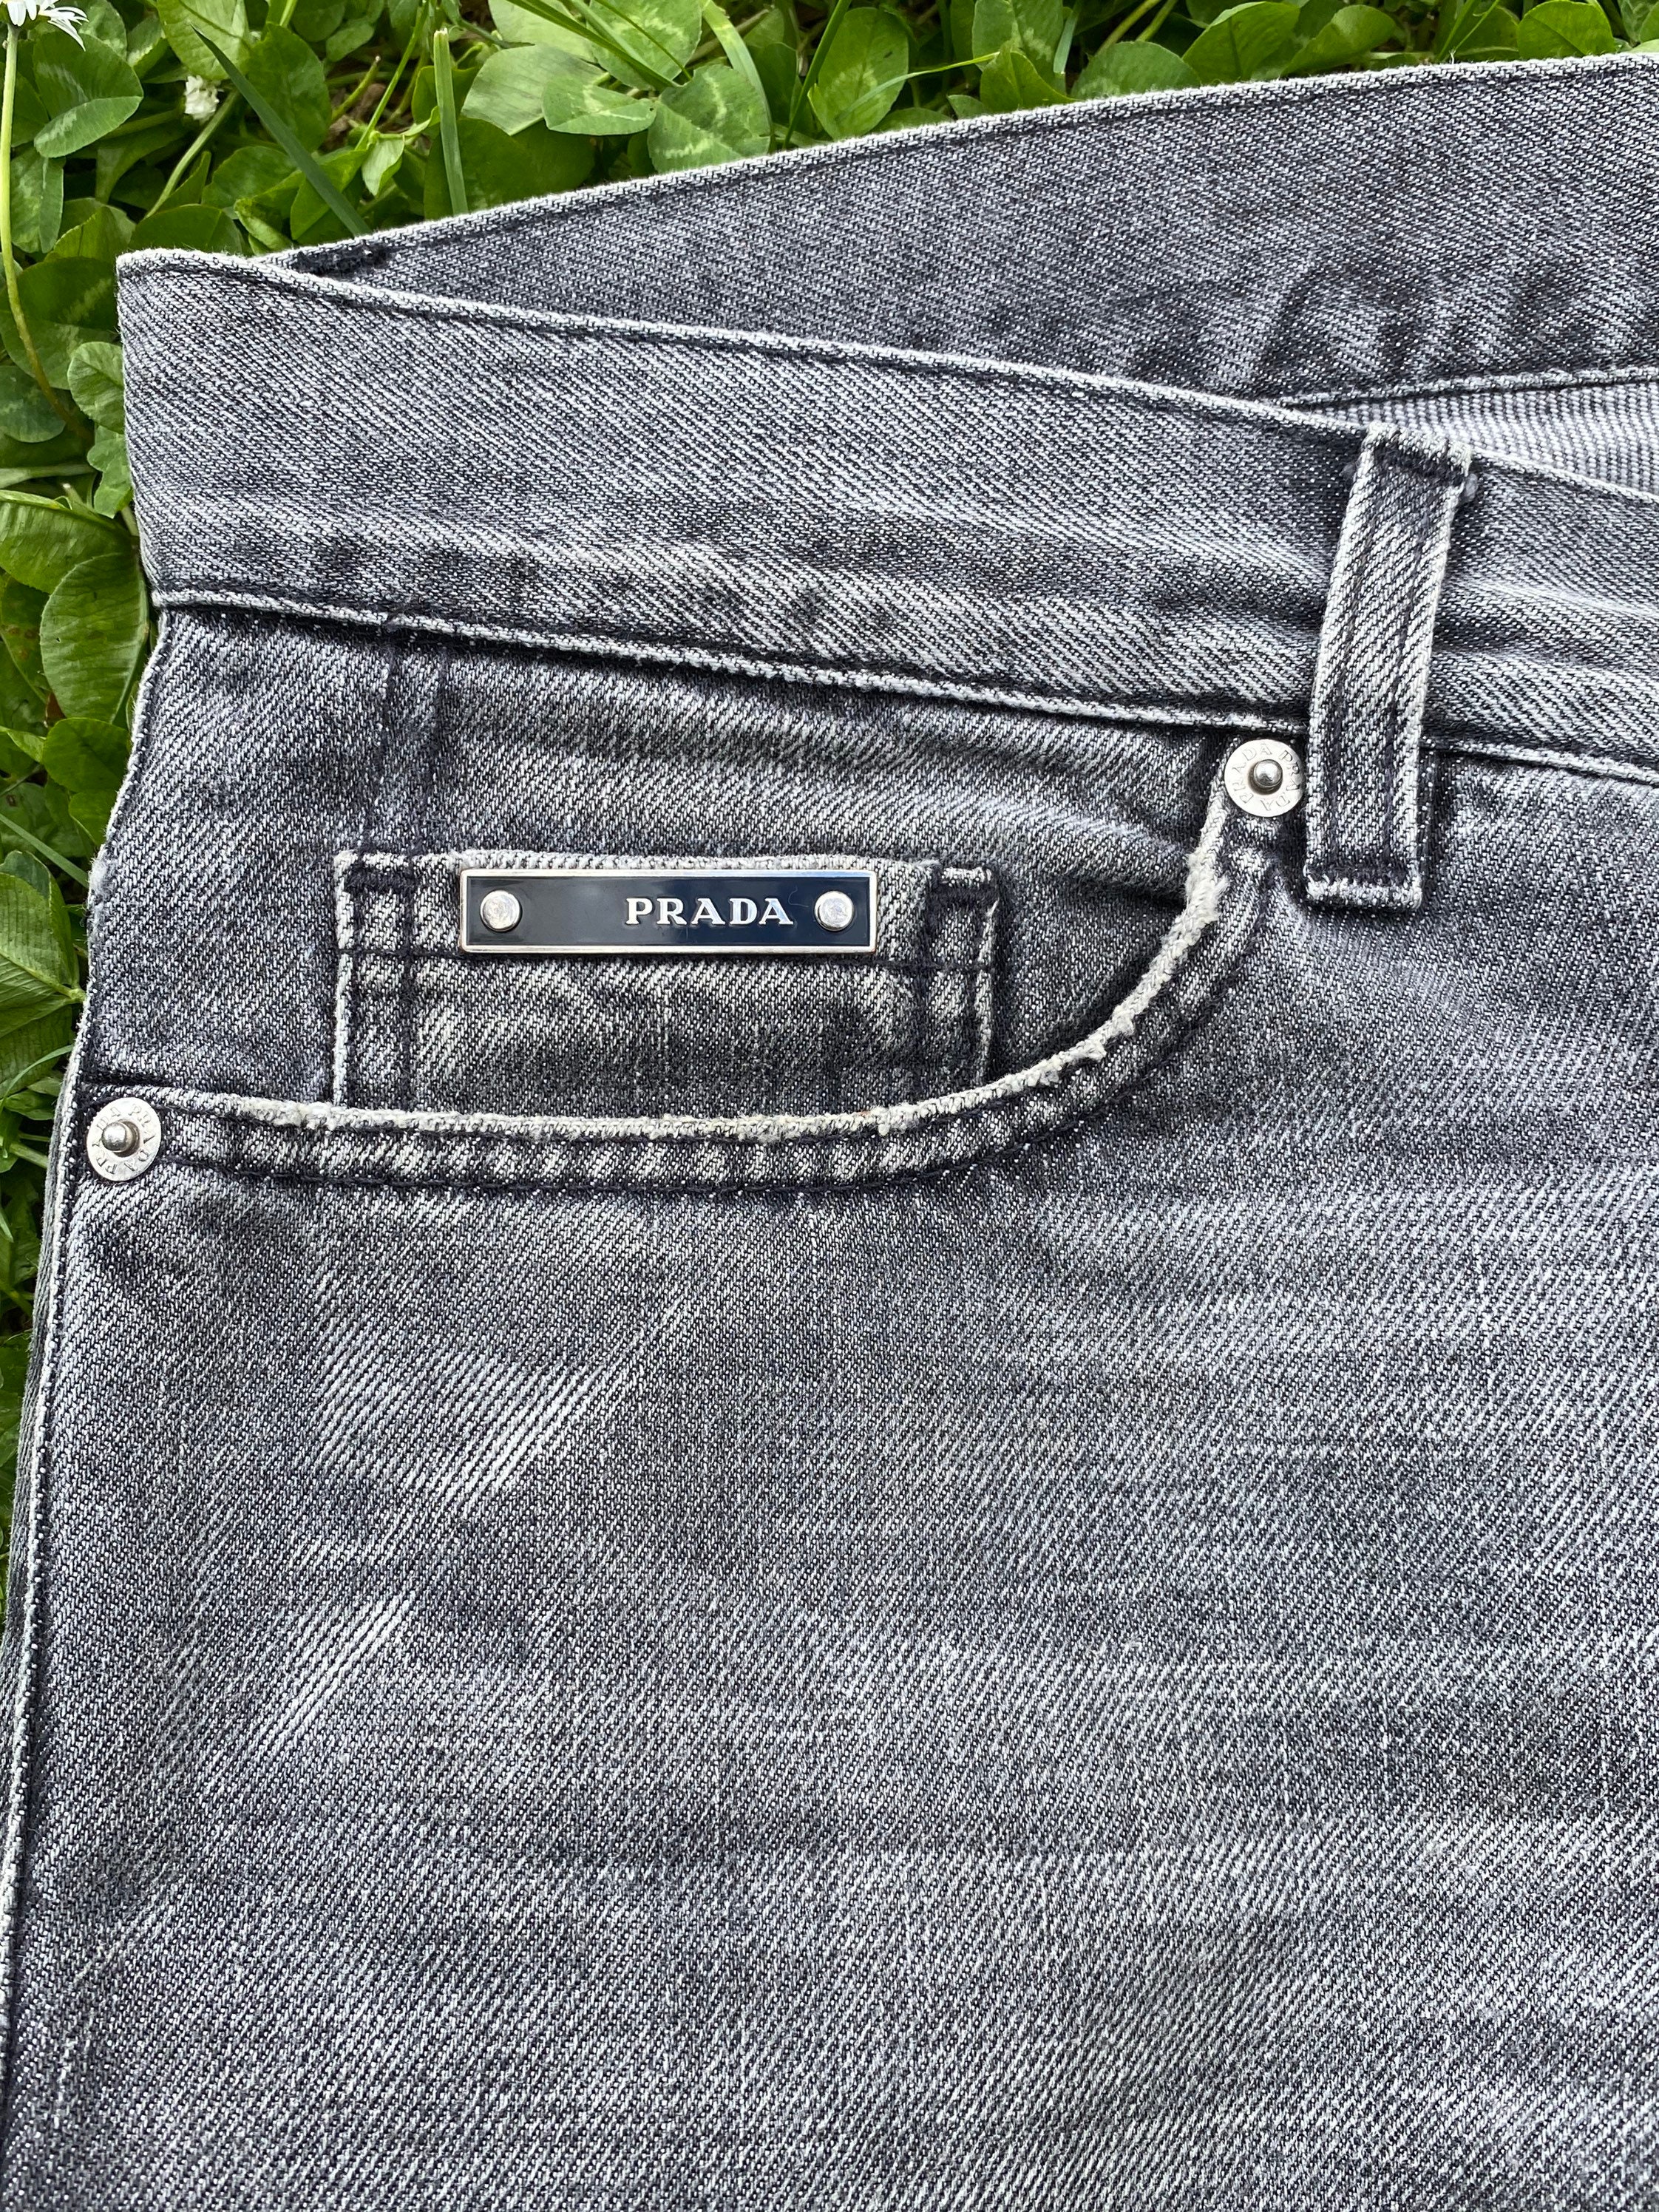 Prada jeans men - Etsy España